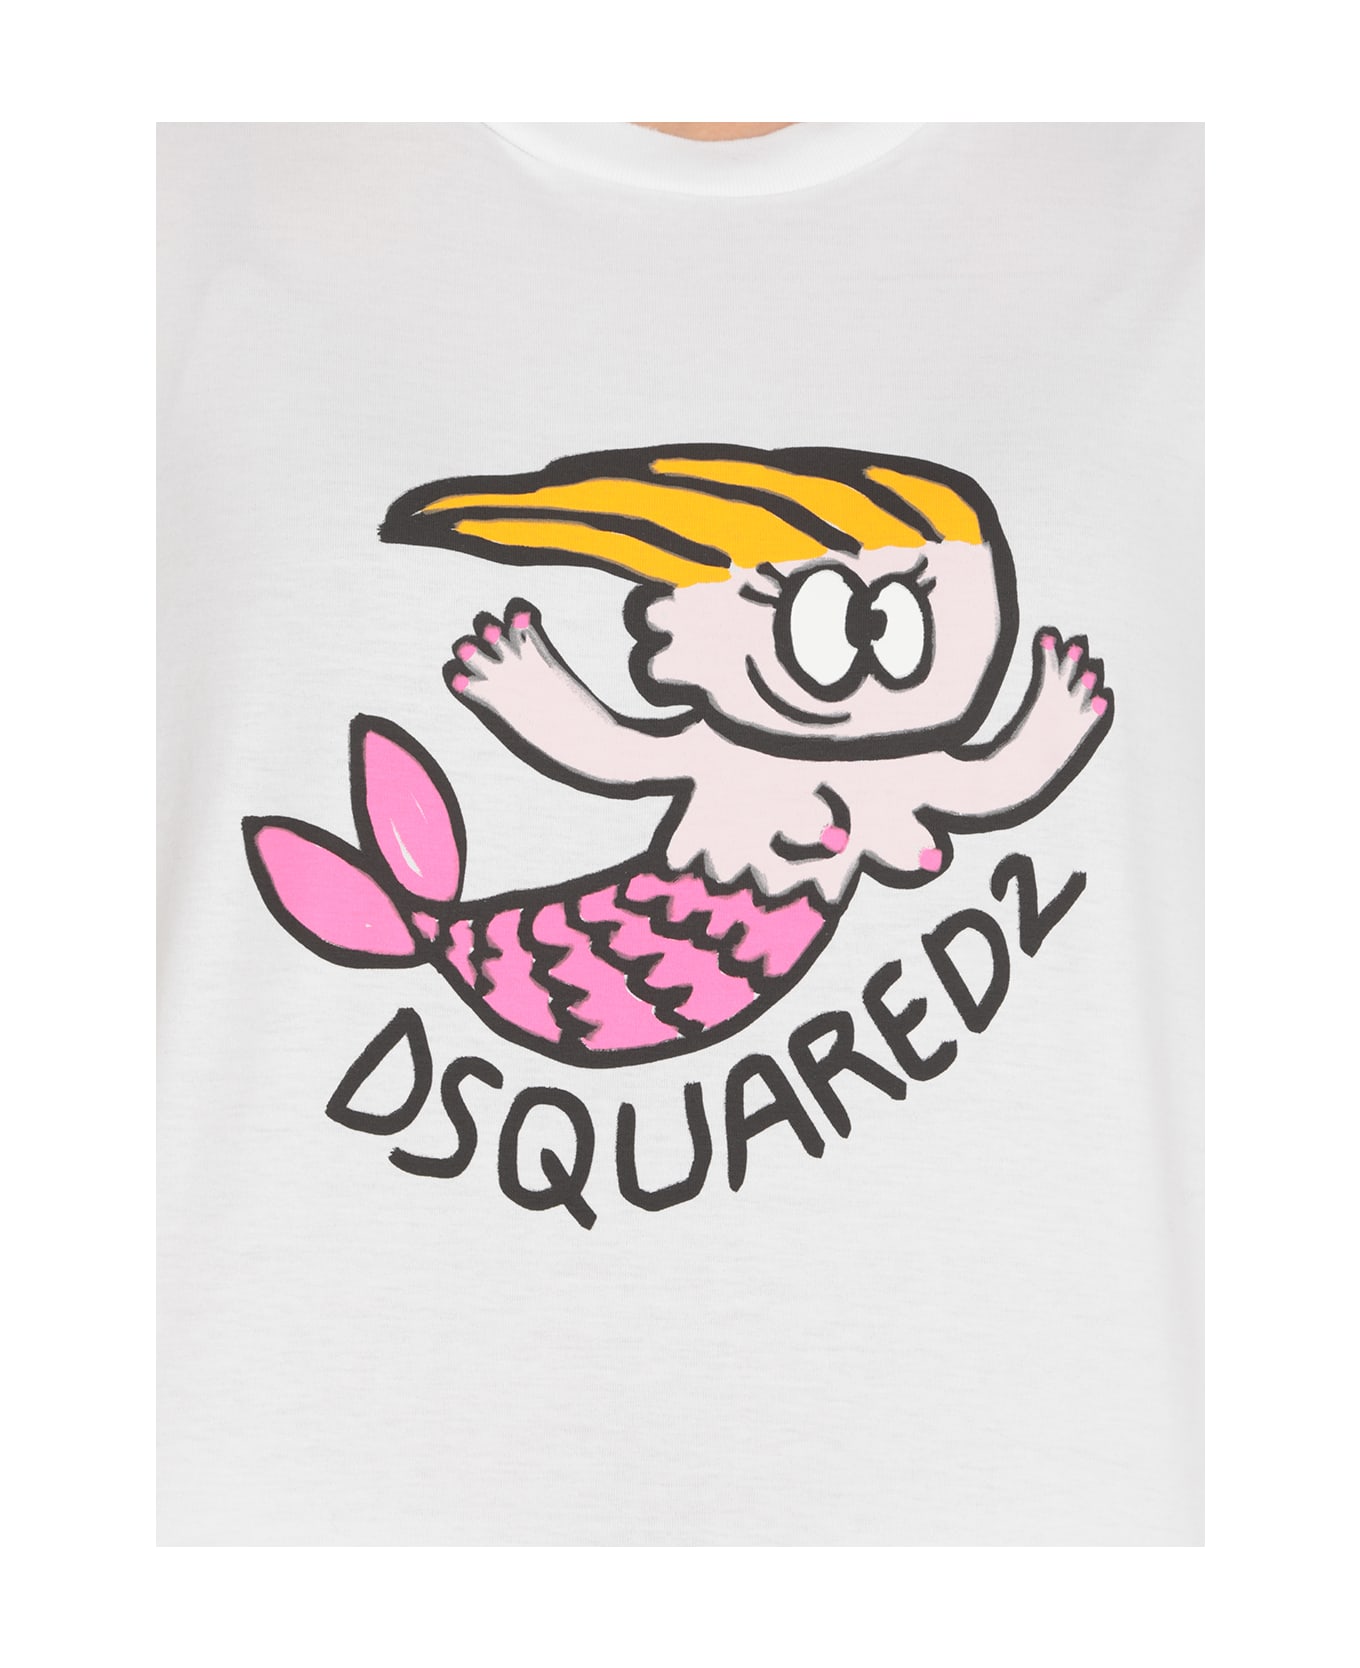 Dsquared2 T-shirts - WHITE